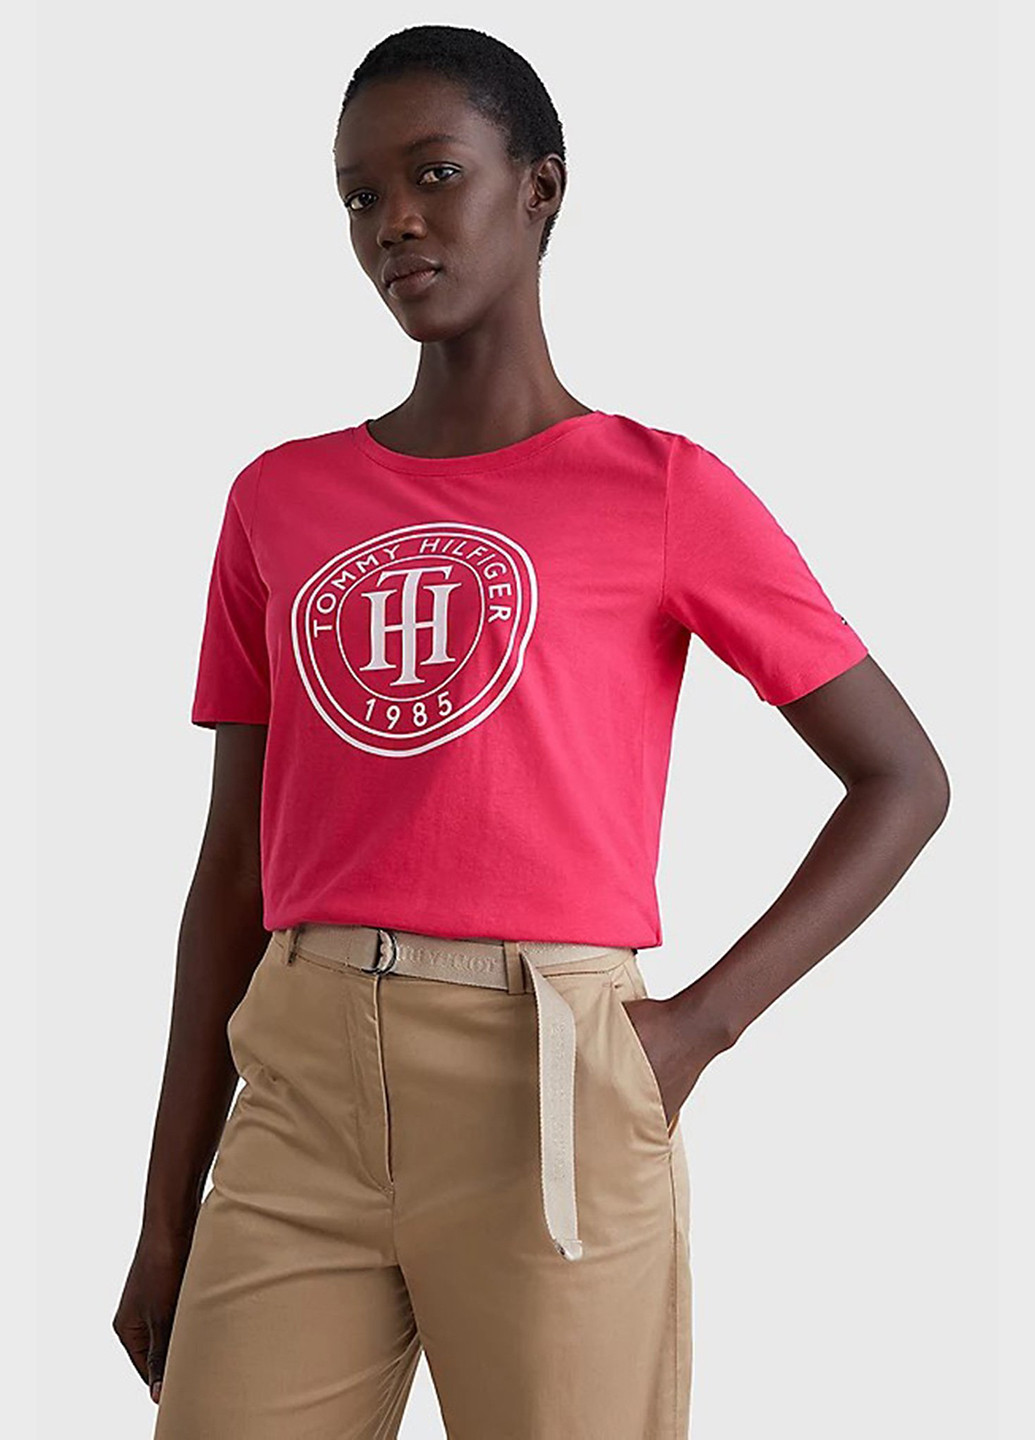 Розовая летняя футболка Tommy Hilfiger